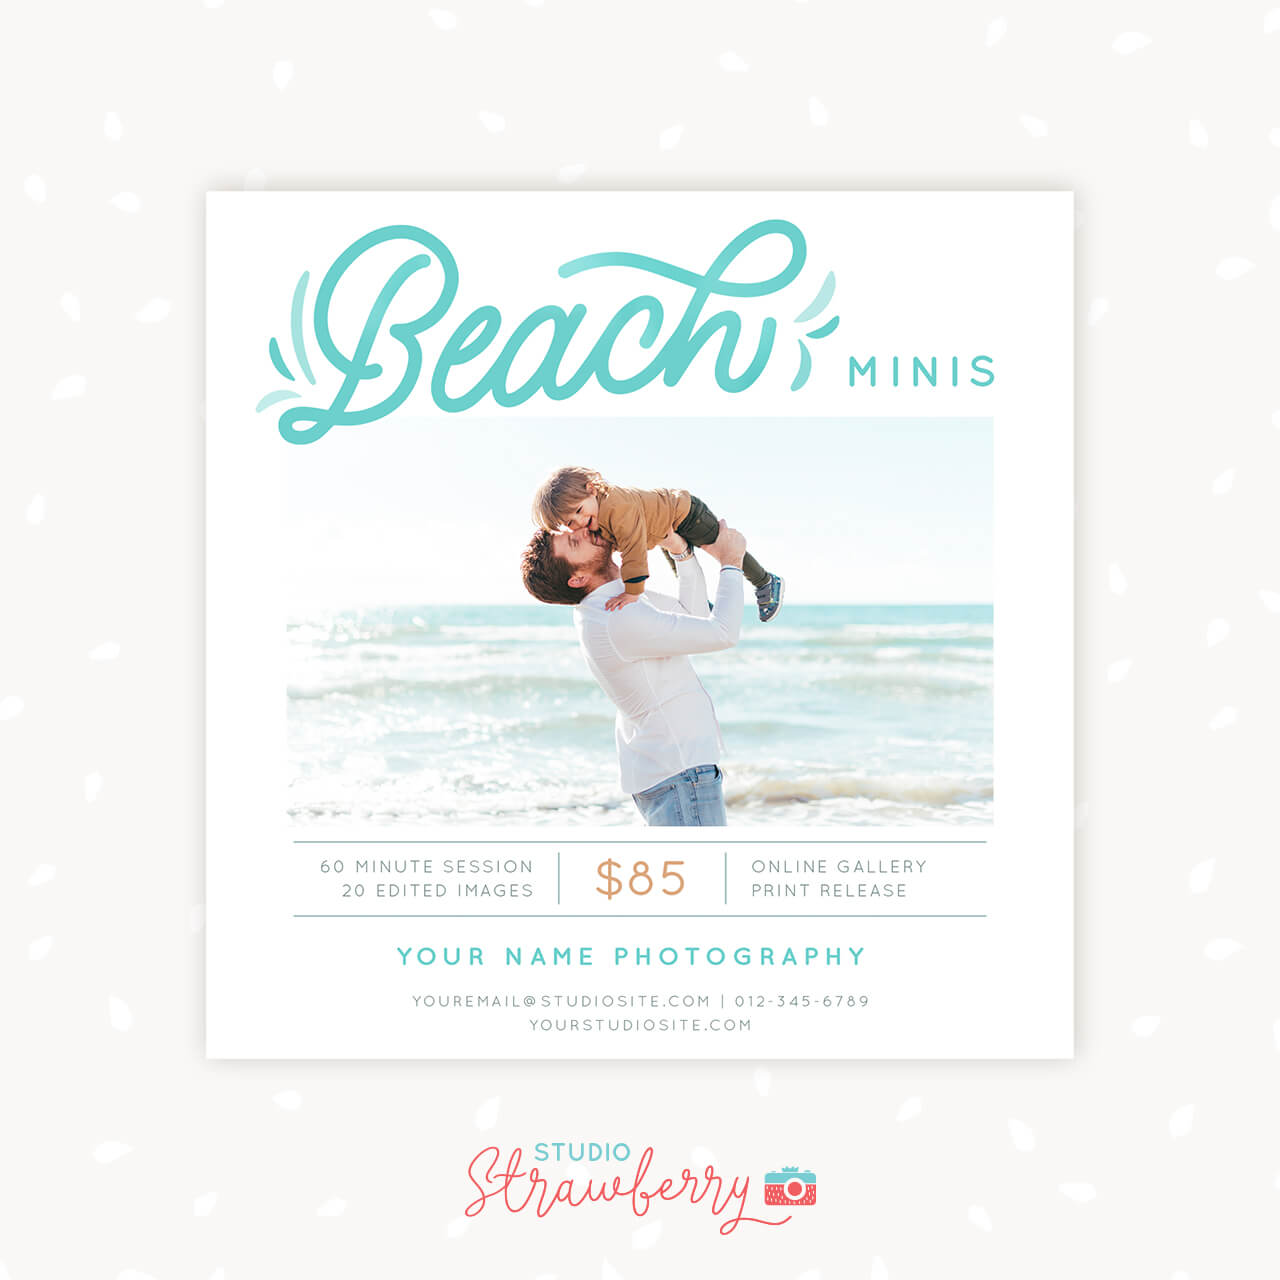 Beach mini sessions template photographer